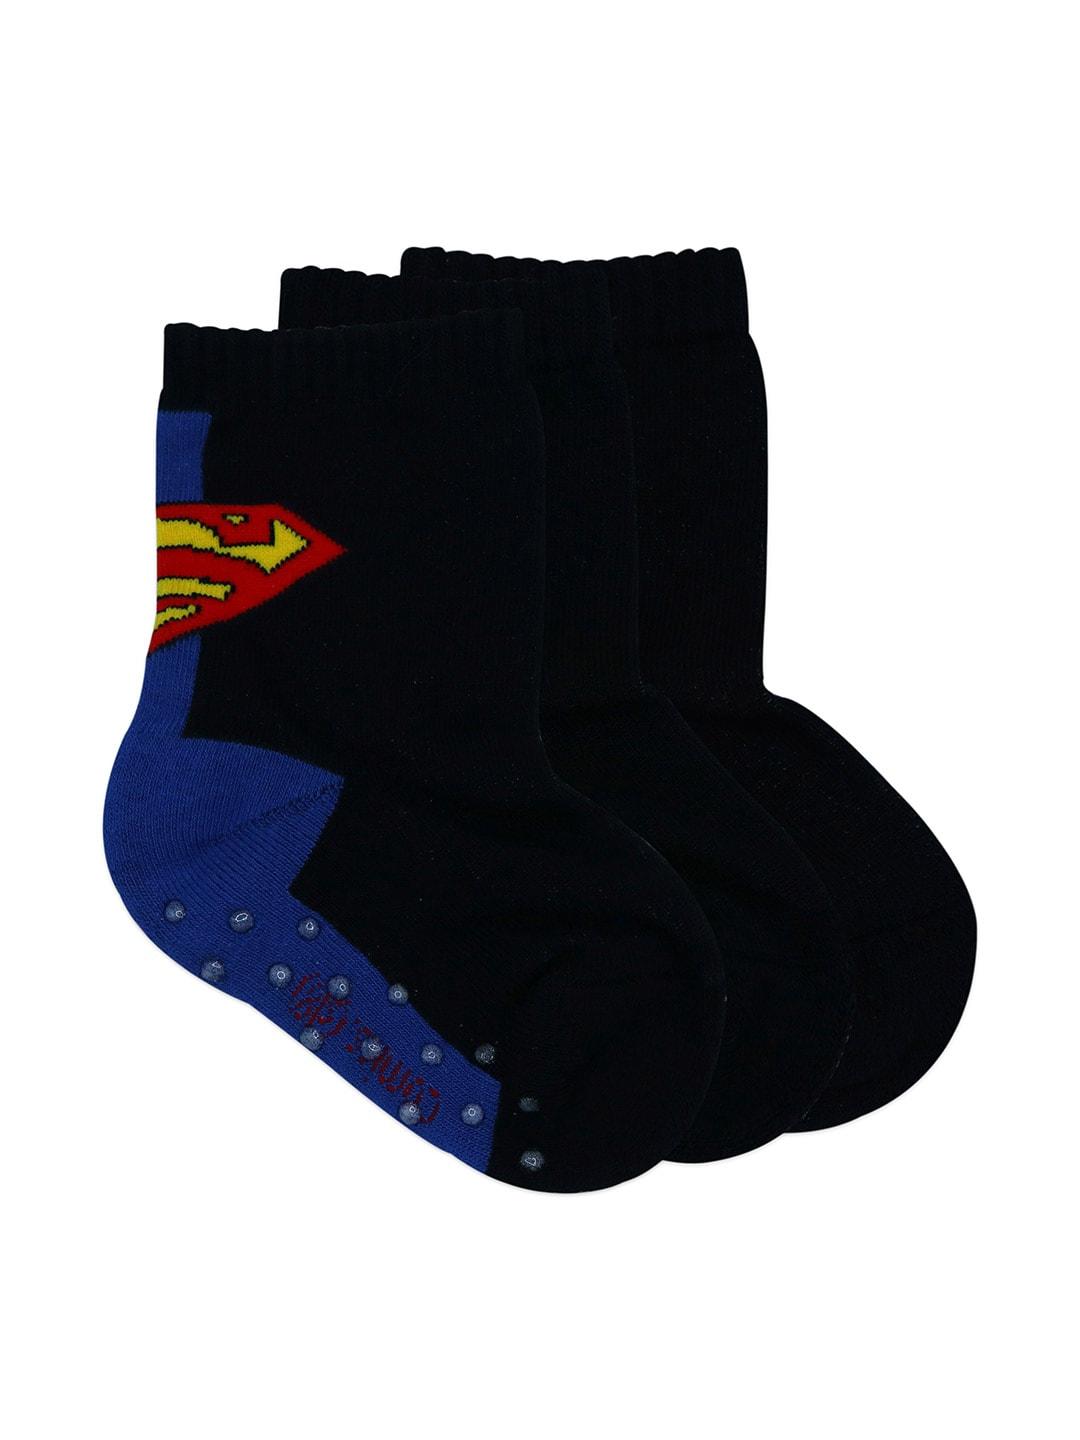 Justice League Kids Pack Of 3 Patterned Calf-Length Anti-Skid Socks